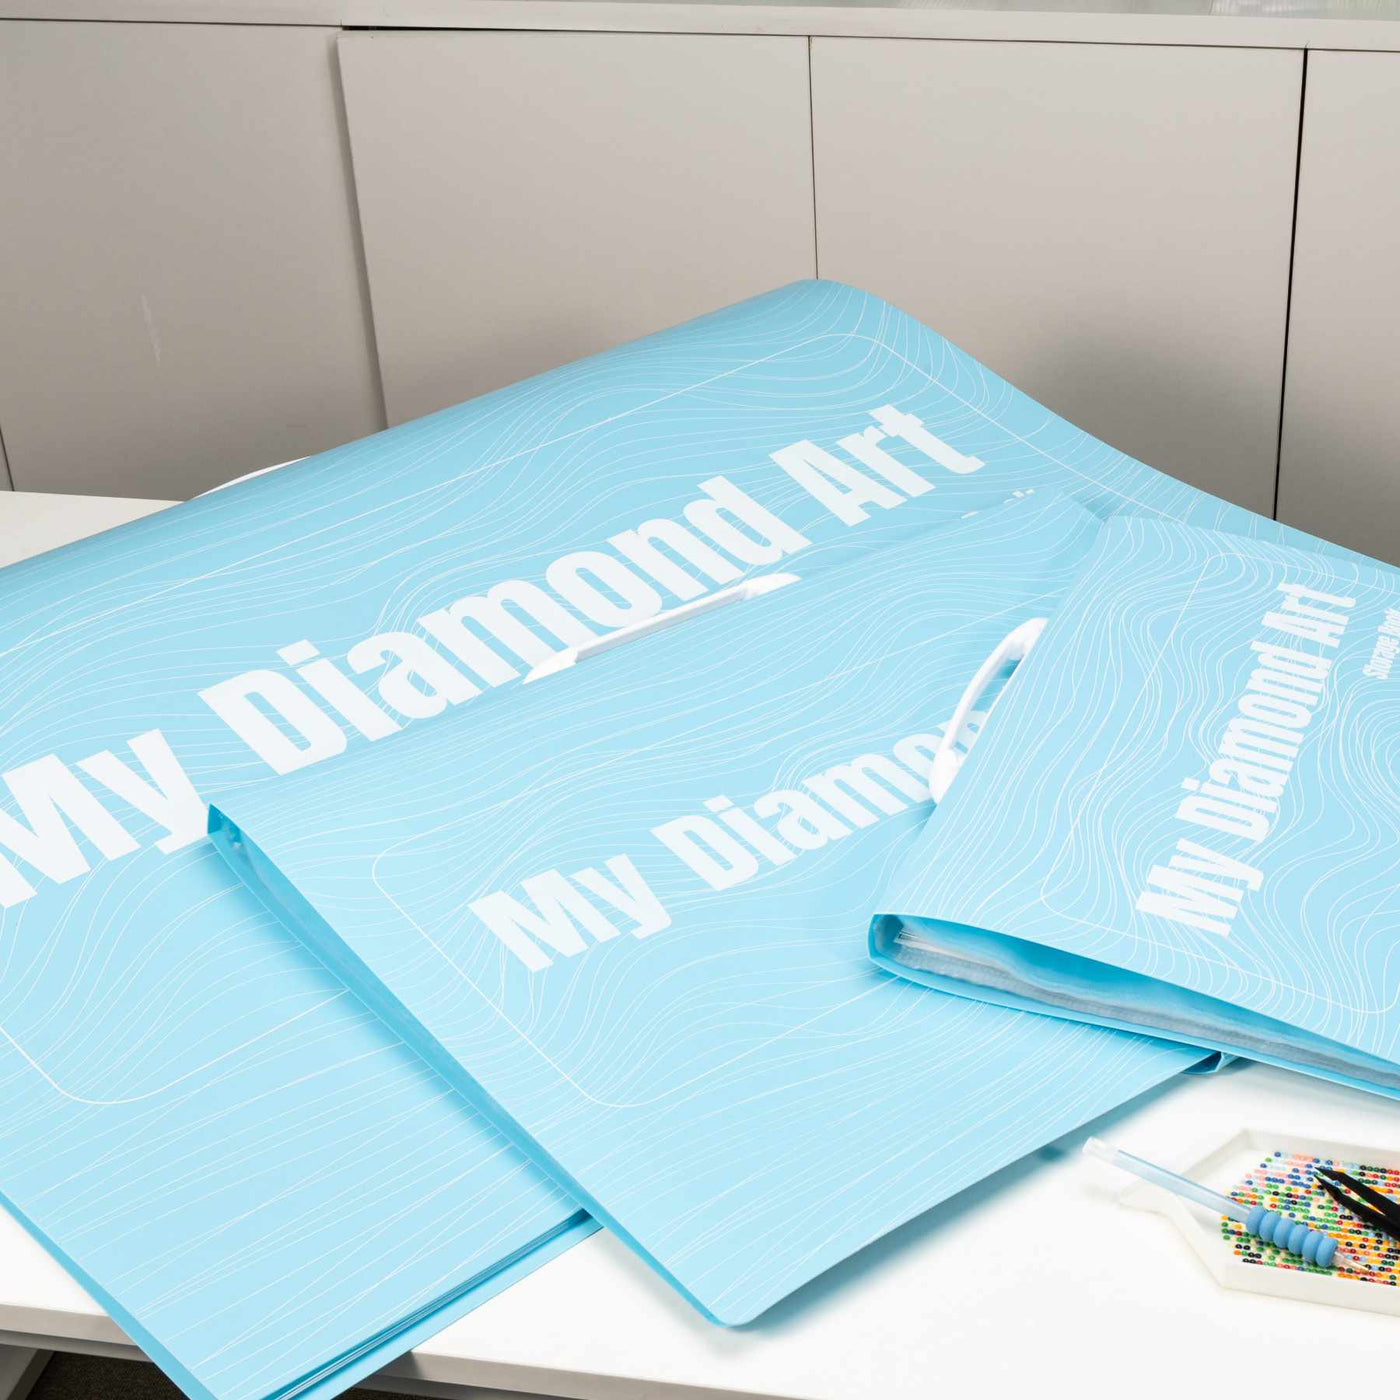 ARTDOT A1 Storage Book for Diamond Painting Kits, A1(85*62.5 cm), Blue